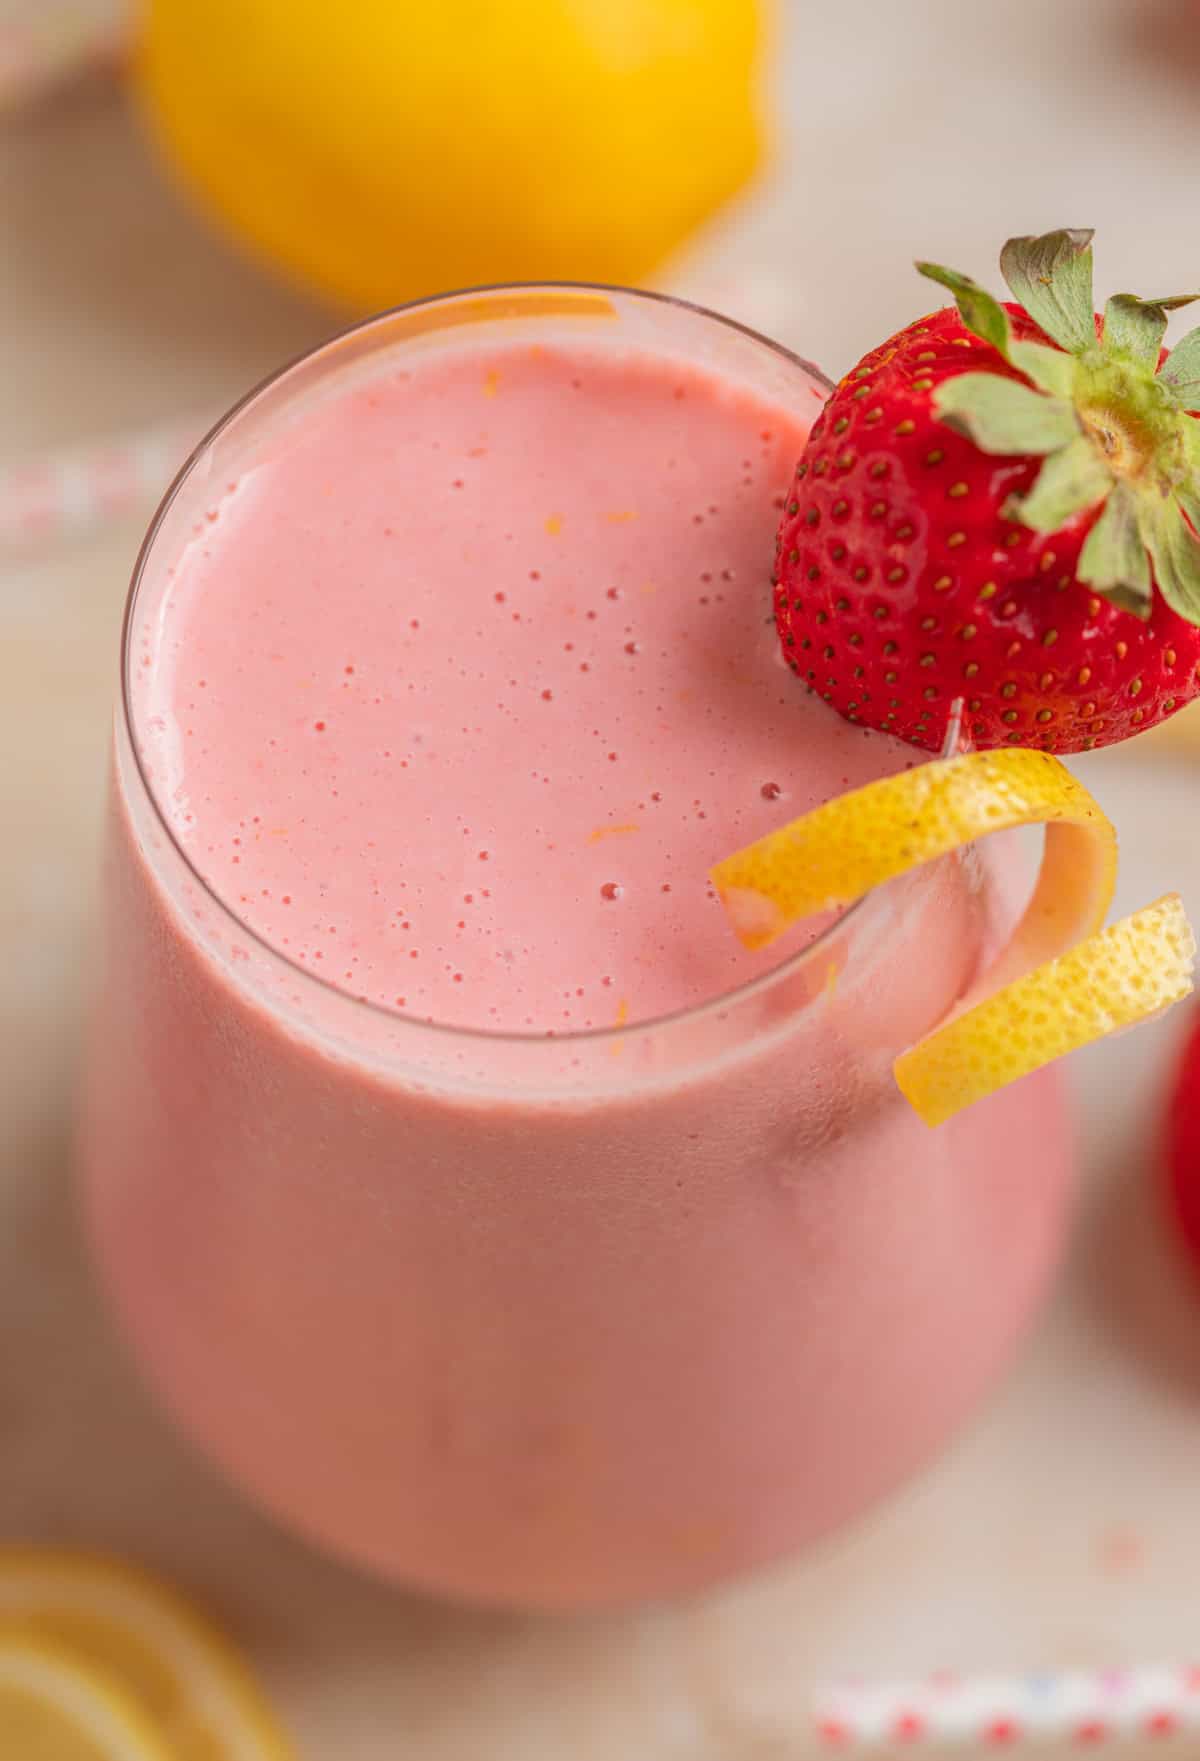 Strawberry lemonade smoothie in glass with lemon zest and strawberry garnish.